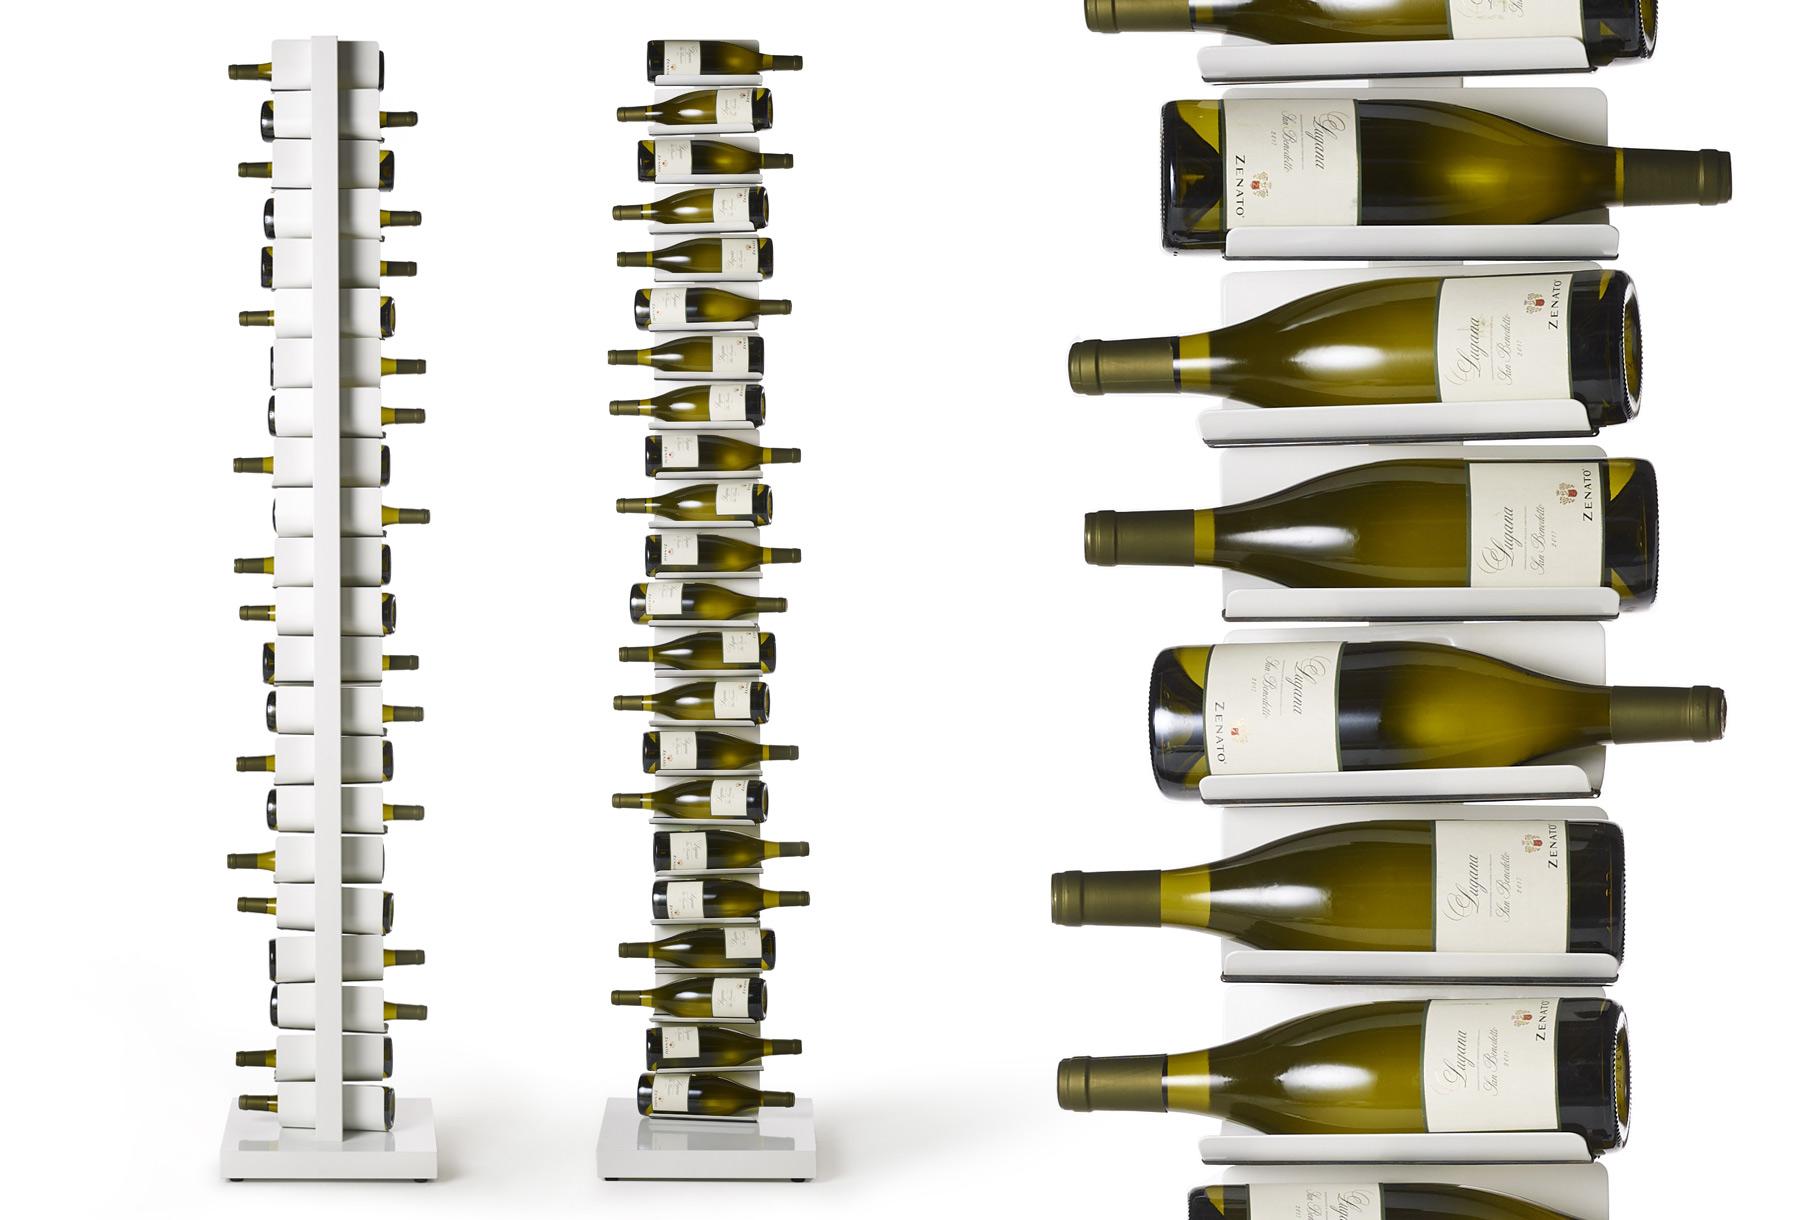 Porte-bouteilles vertical Ptolomeo Vino de Opinion Ciatti, grand modèle en vente 8